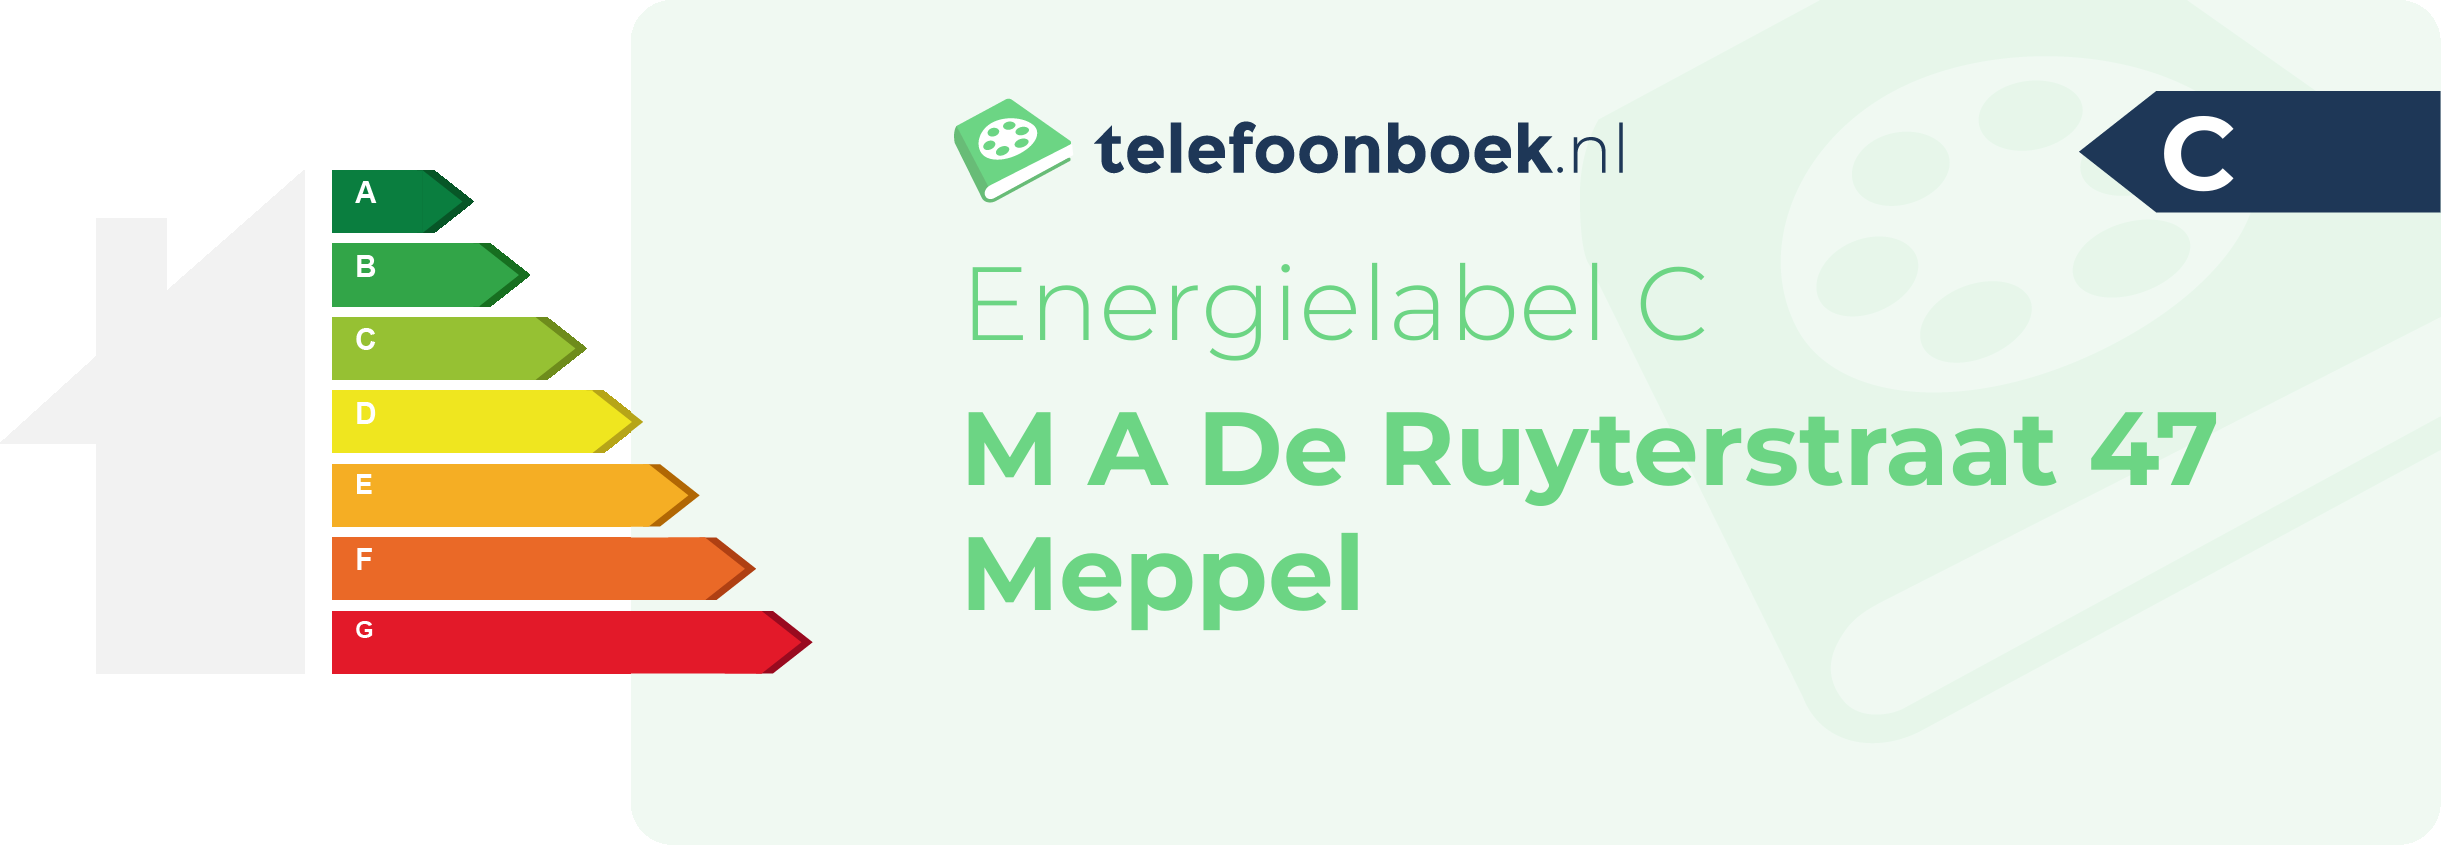 Energielabel M A De Ruyterstraat 47 Meppel